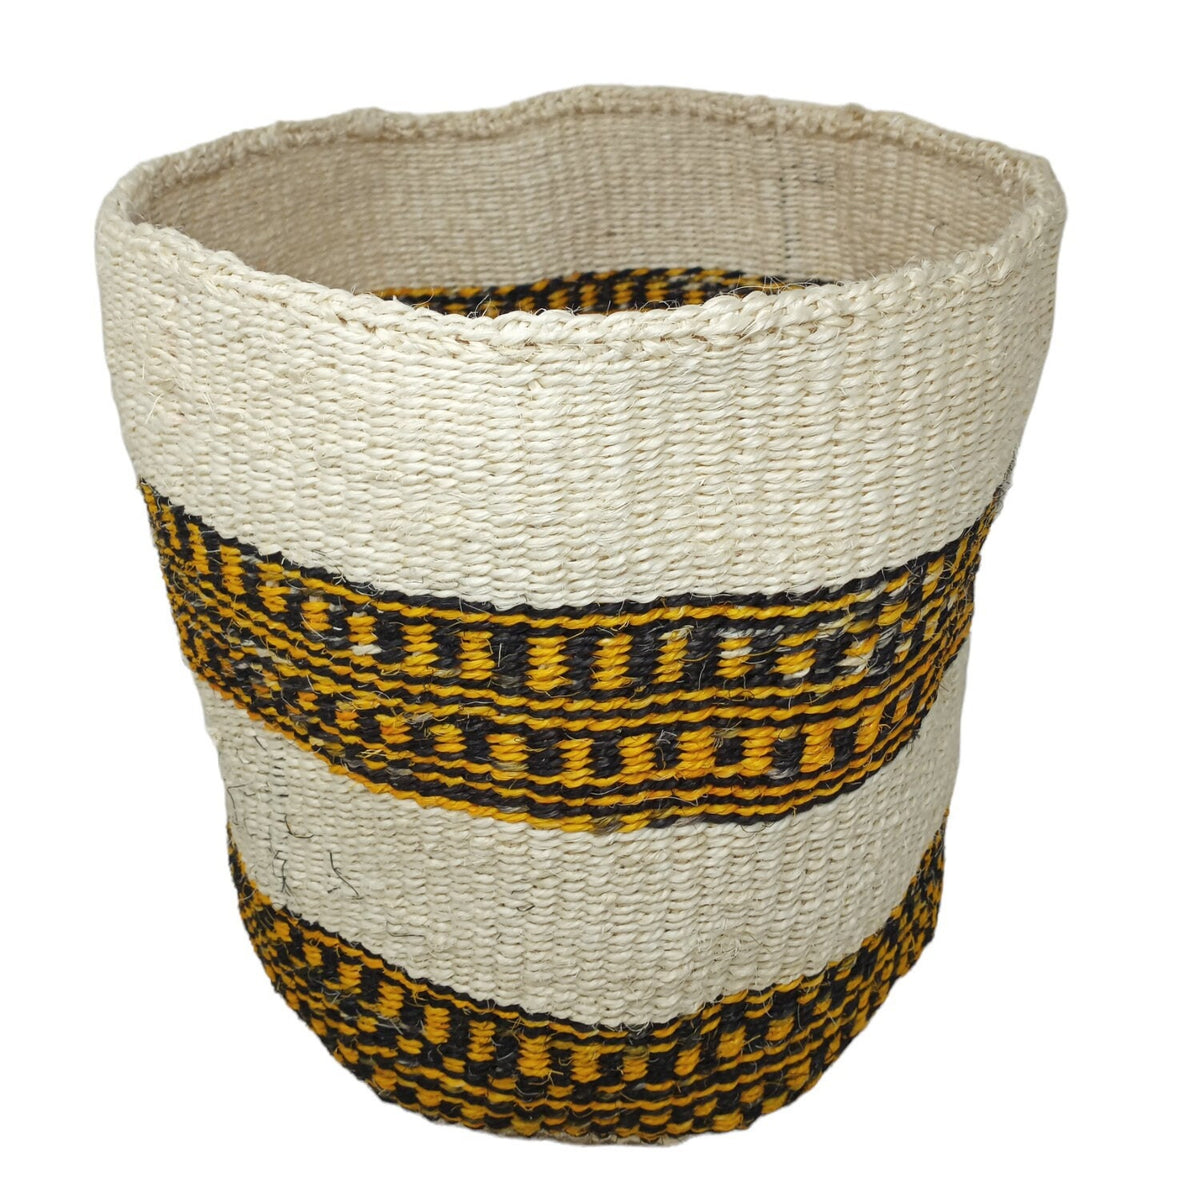 Woven African basket, 12 Inch baskets, Baskets for plants,  Handmade plant basket, Boho planters, Woven basket plant, woven storage basket